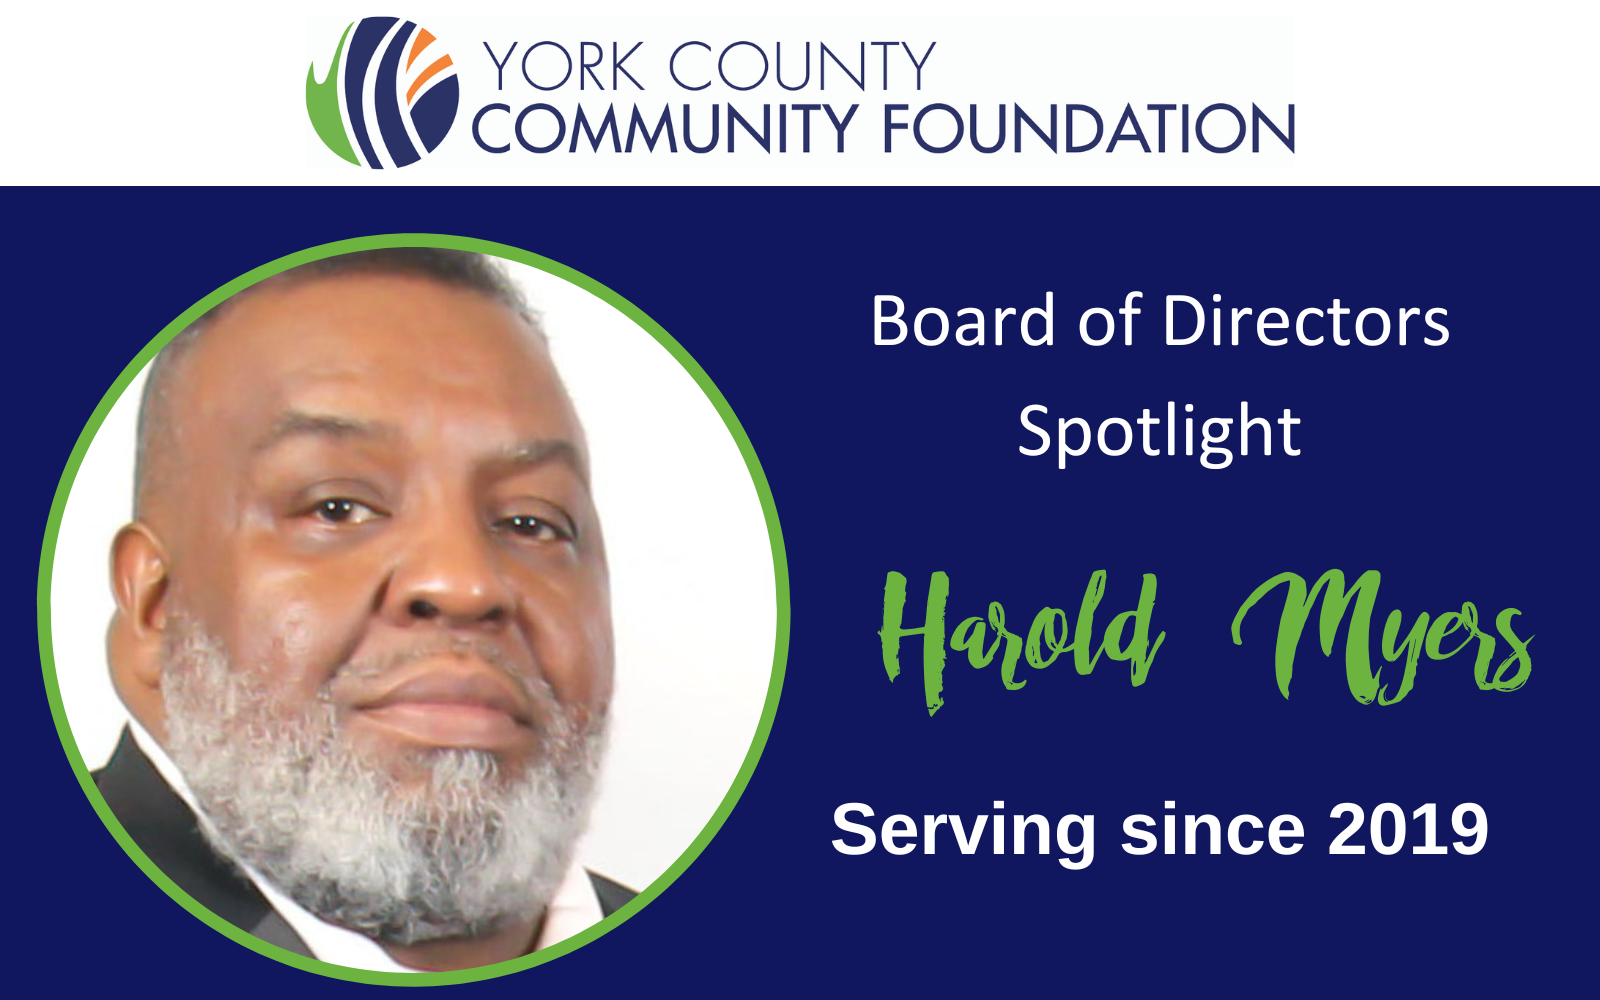 Board Member Spotlight: Harold Myers